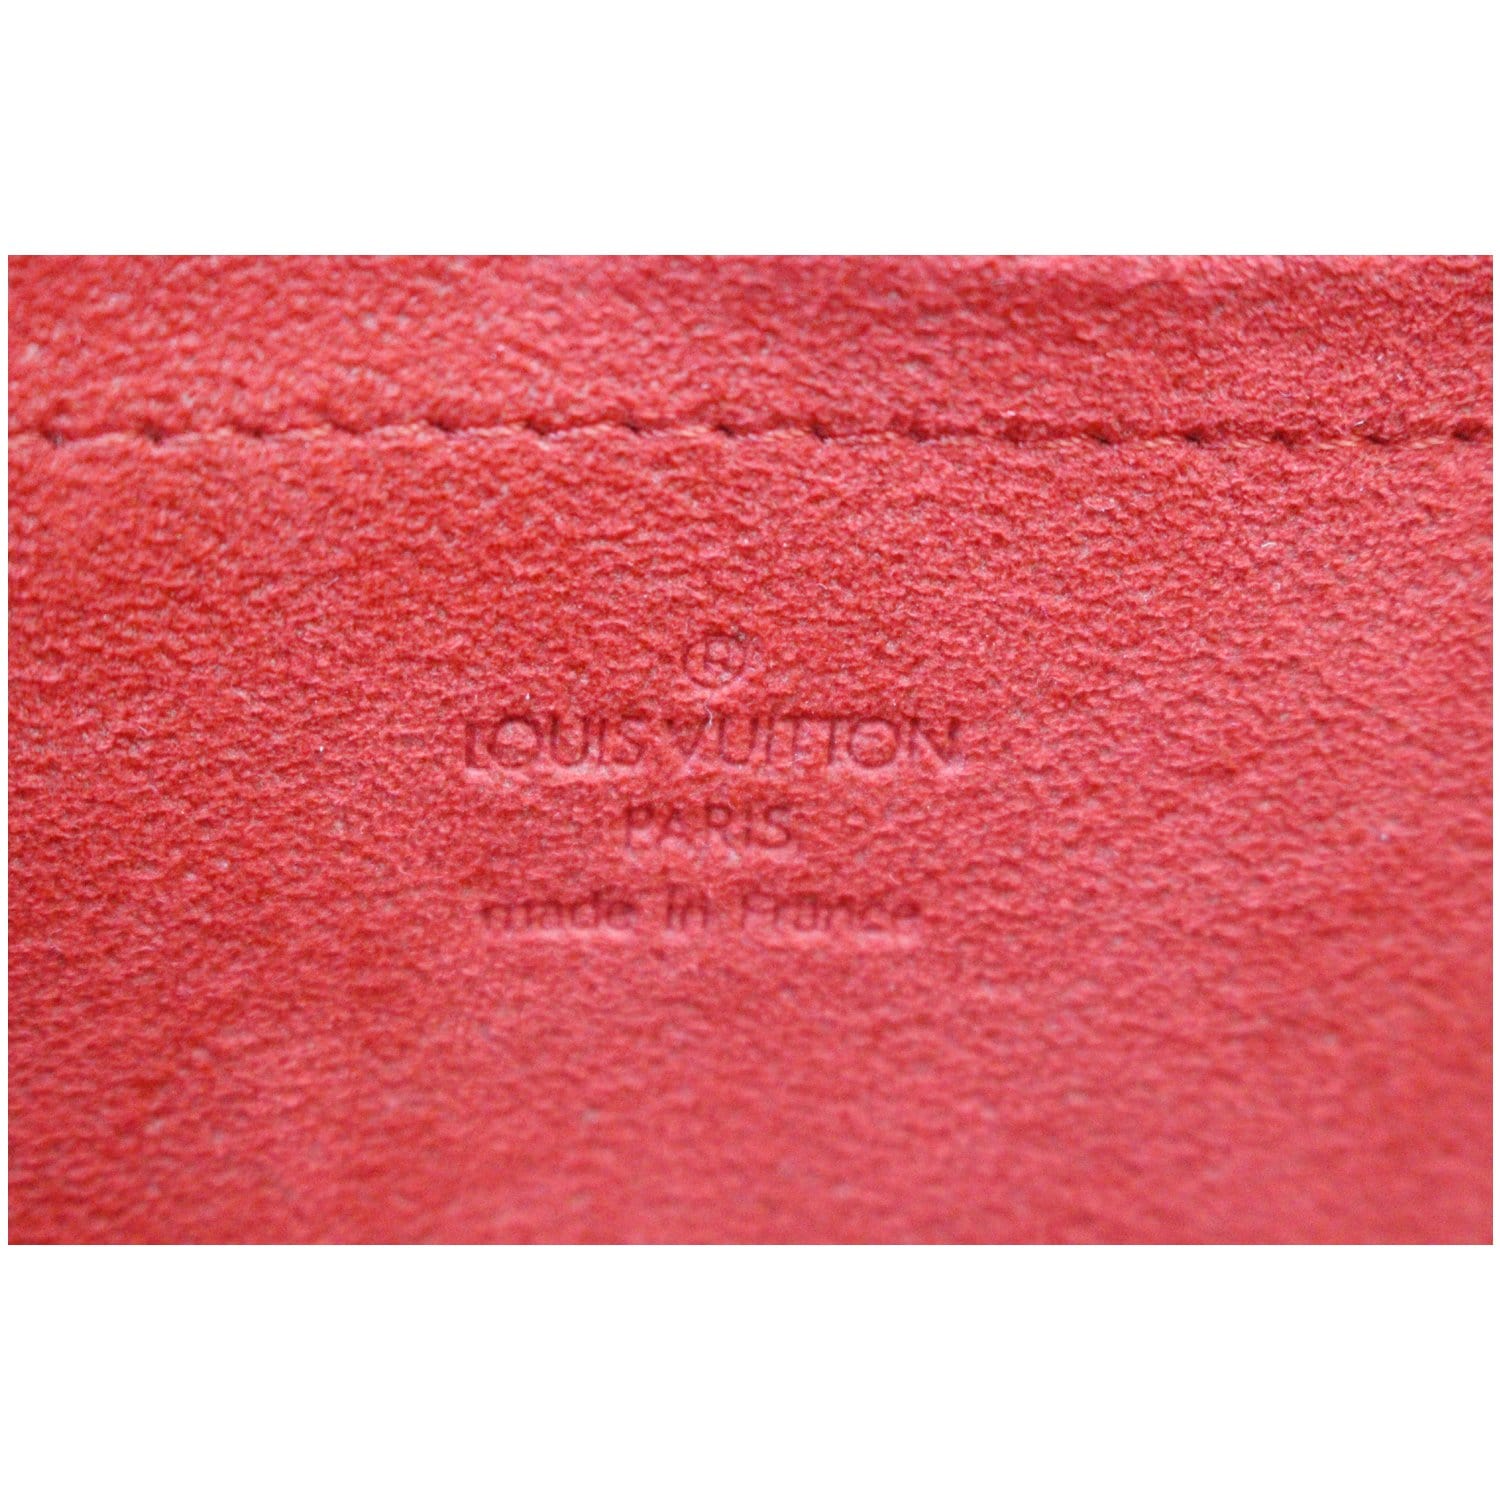 Louis Vuitton Damier Knightsbridge Buckle Boston Bag 3lv131s